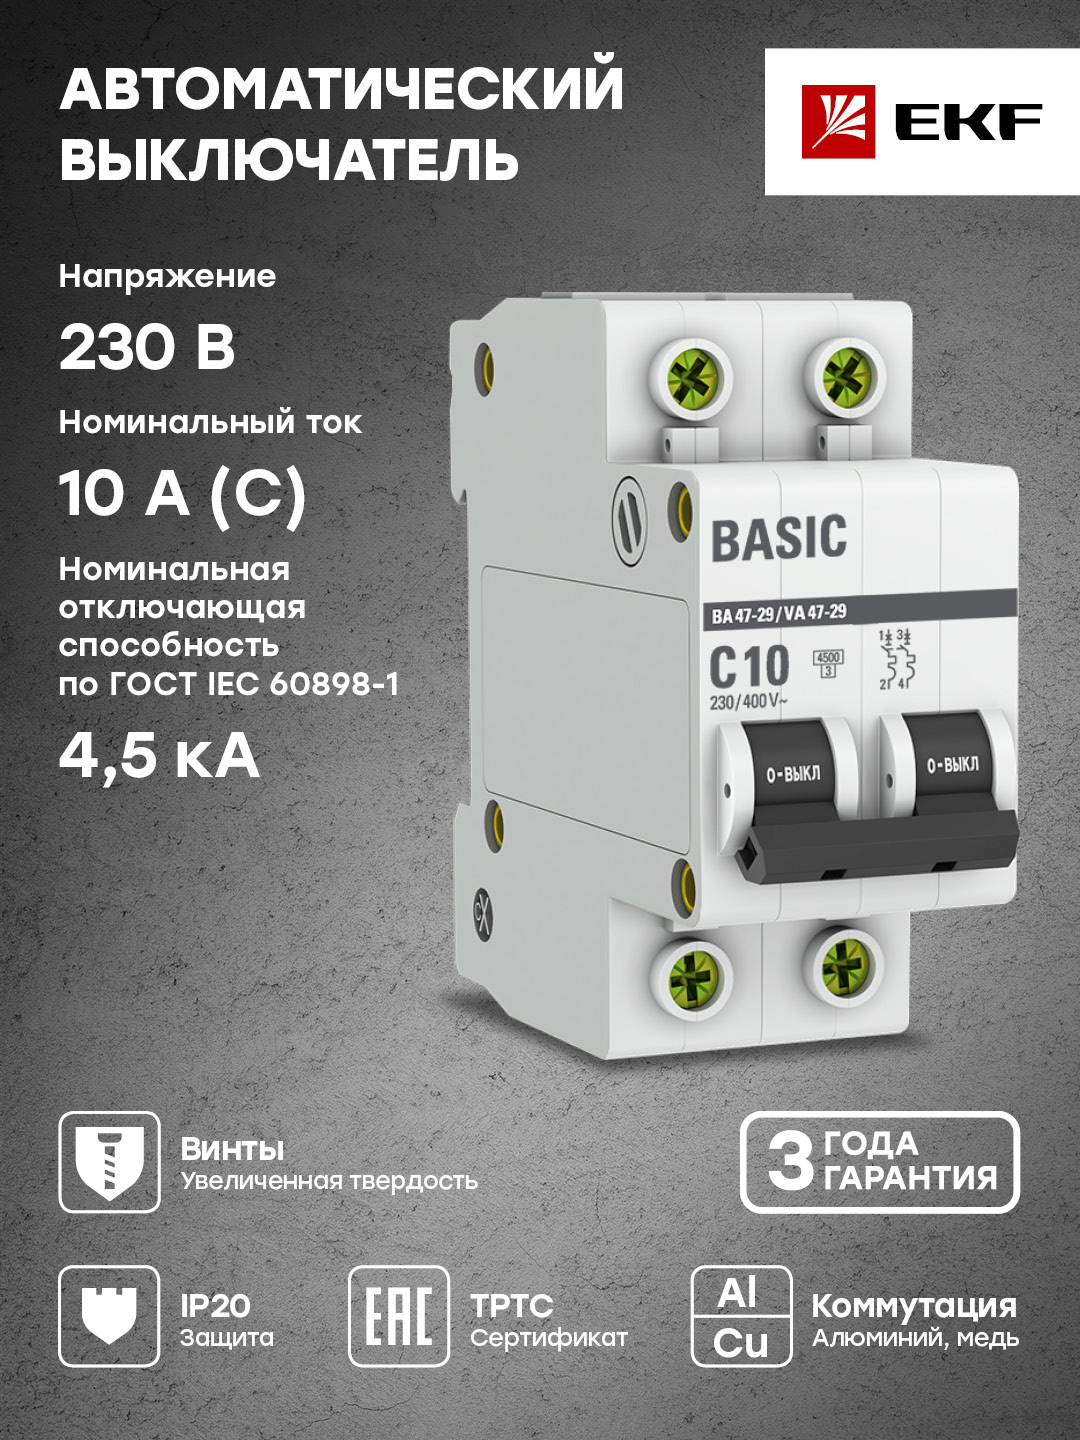 Автоматический выключатель EKF Basic 2P 10А (C) 4,5кА ВА 47-29 mcb4729-2-10C